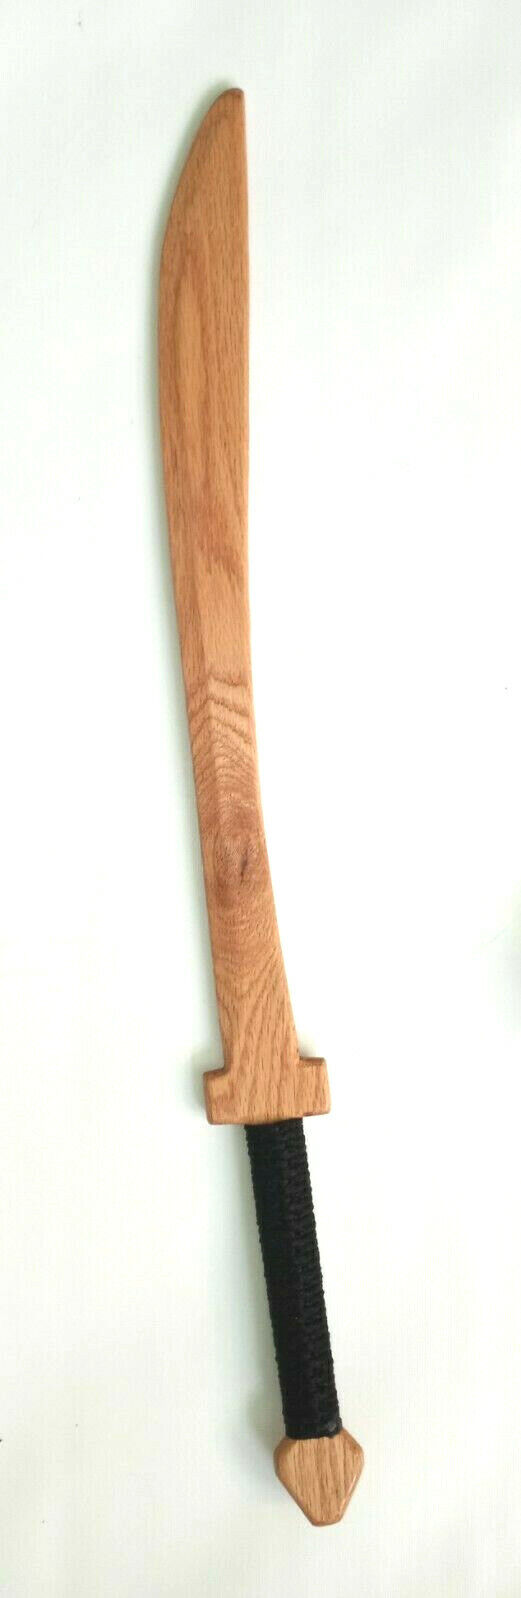 Krabi Krabong Muay Thai Wooden Samurai Katana Hand Made Practice Sword Oak Wood